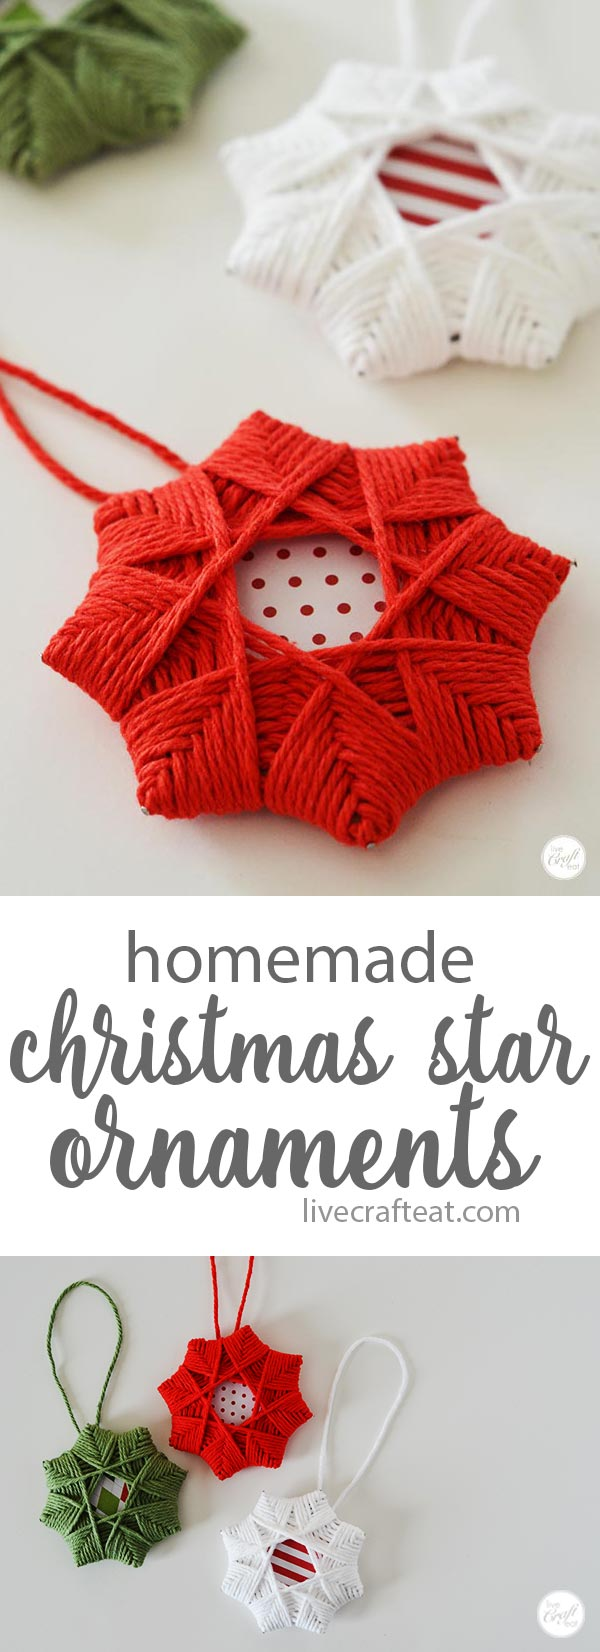 Homemade Christmas Tree Star Ornament With Yarn | Live Craft Eat - Homemade Christmas Tree Star Ornament With Yarn | Live Craft Eat -   19 diy Easy christmas ideas